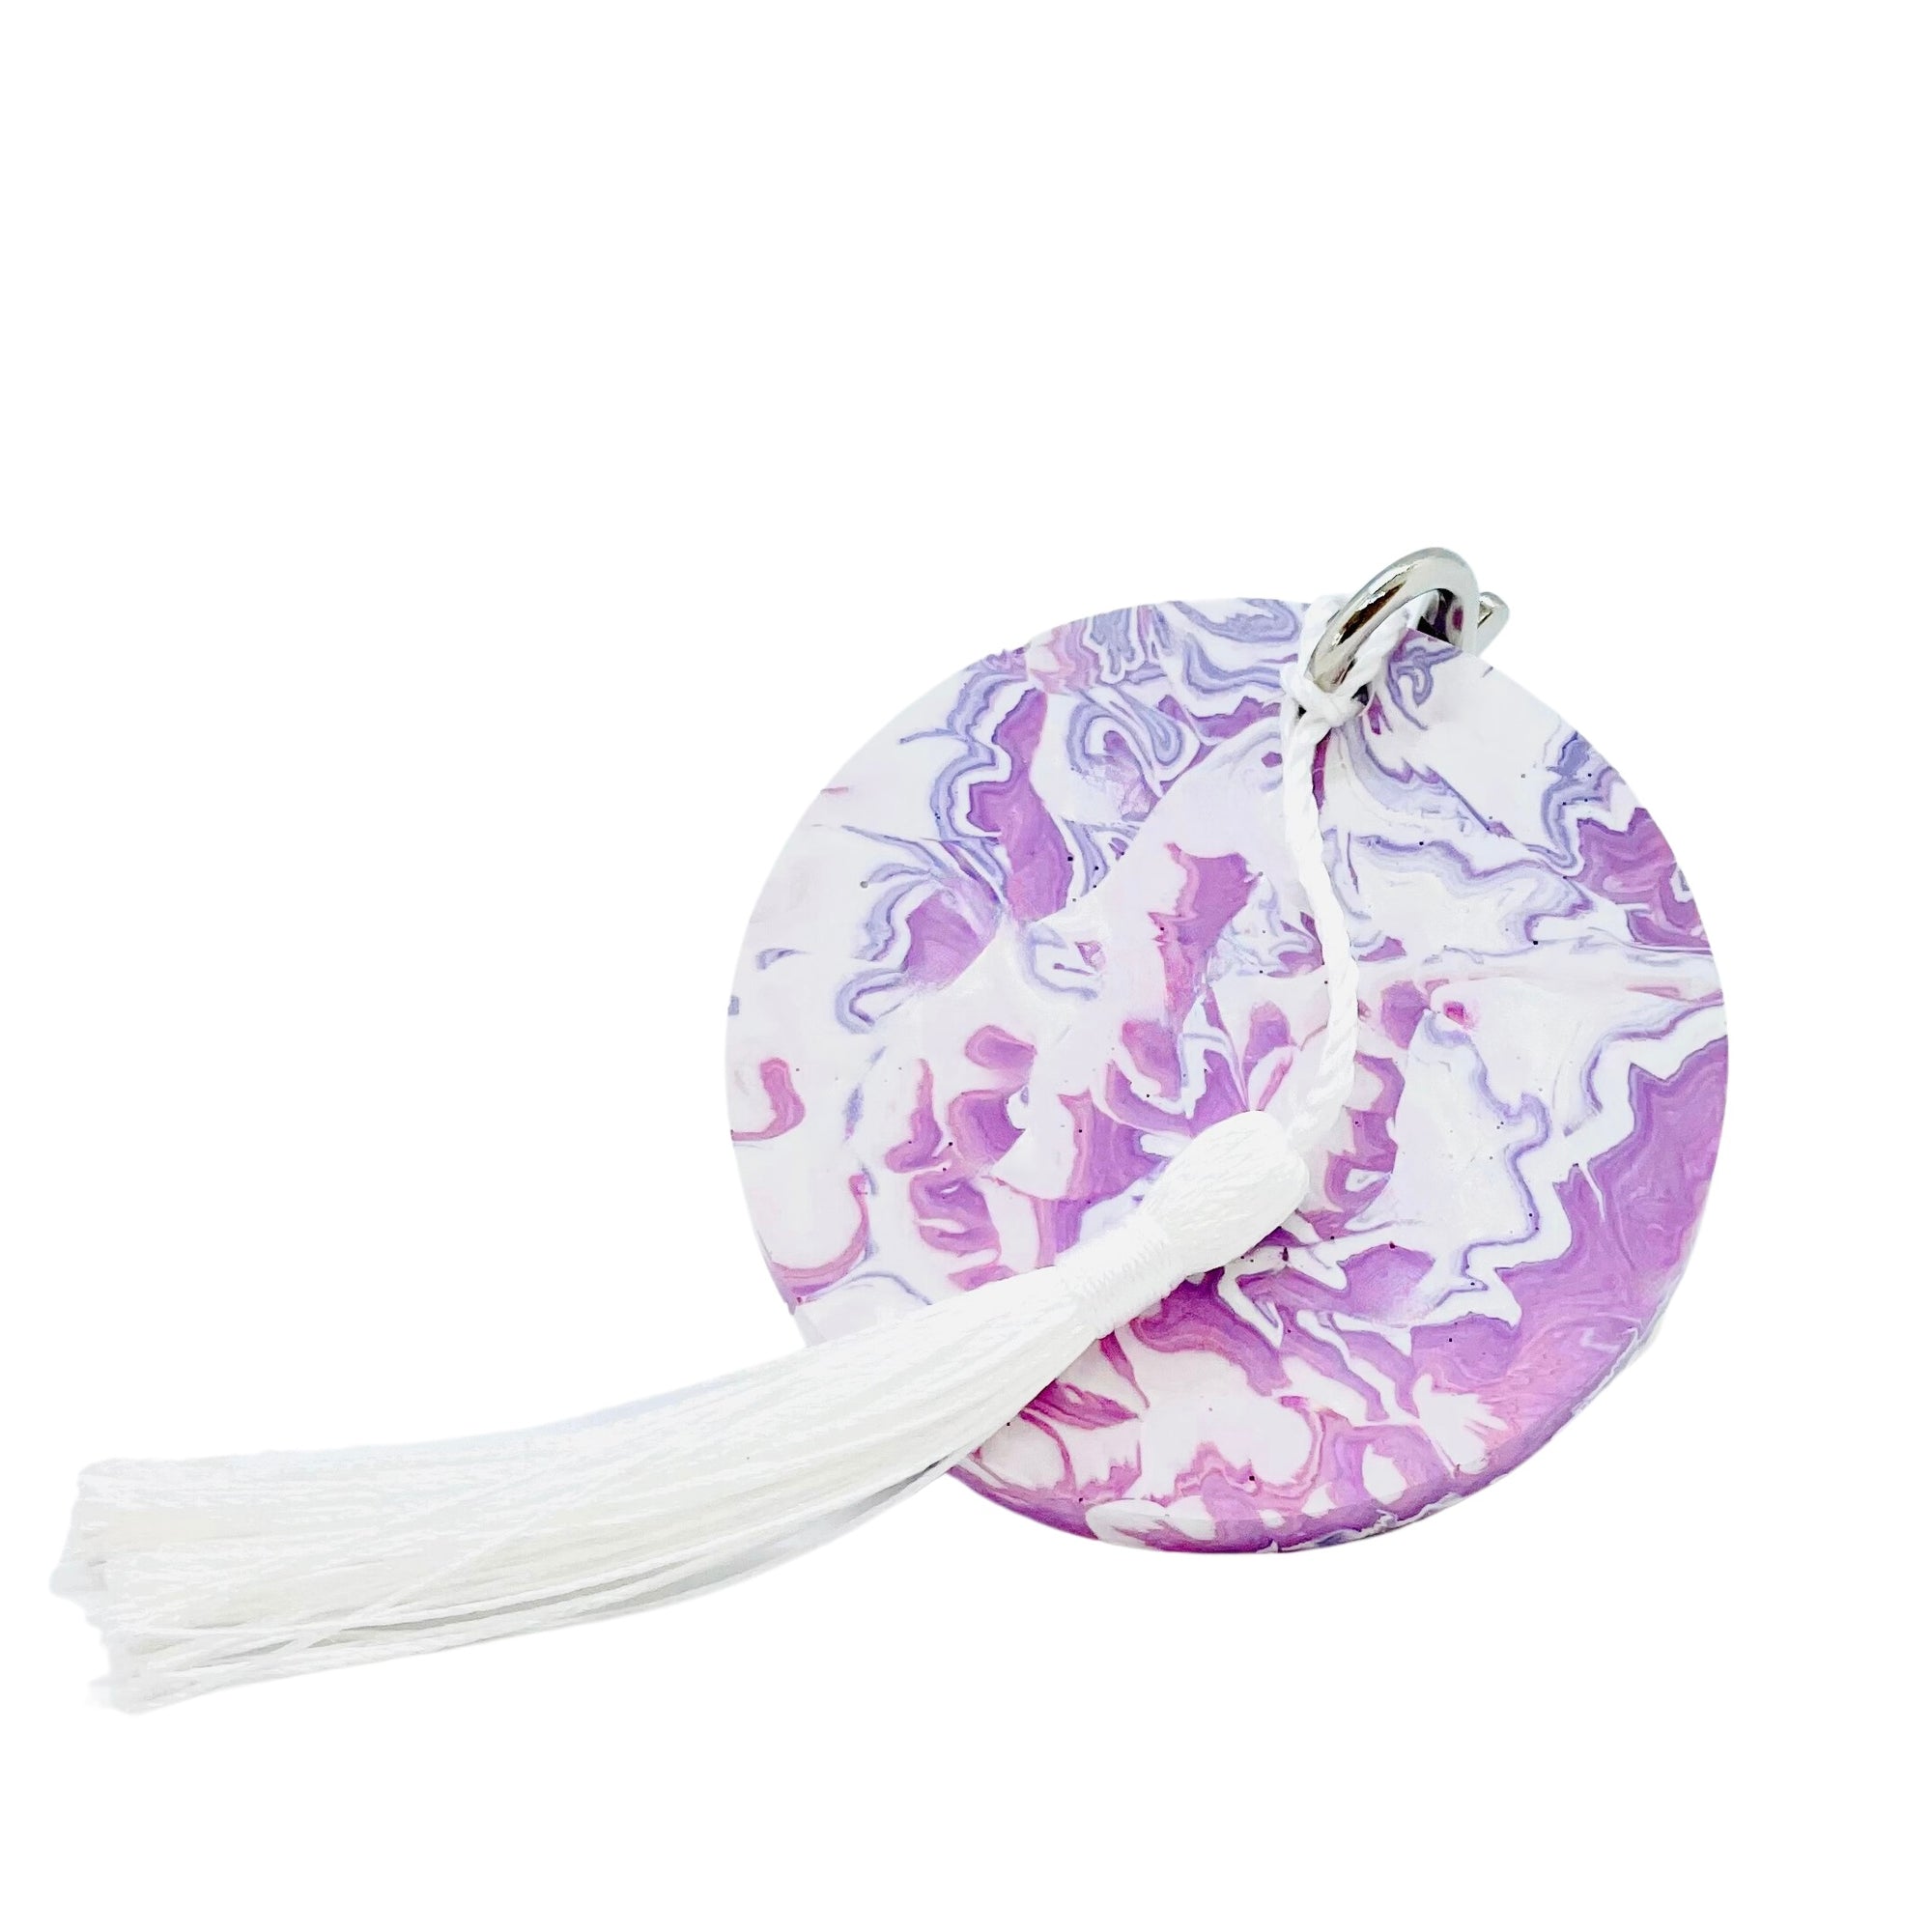 A round Jesmonite disc keyring measuring 6cm in diameter marbled with purple pigment.